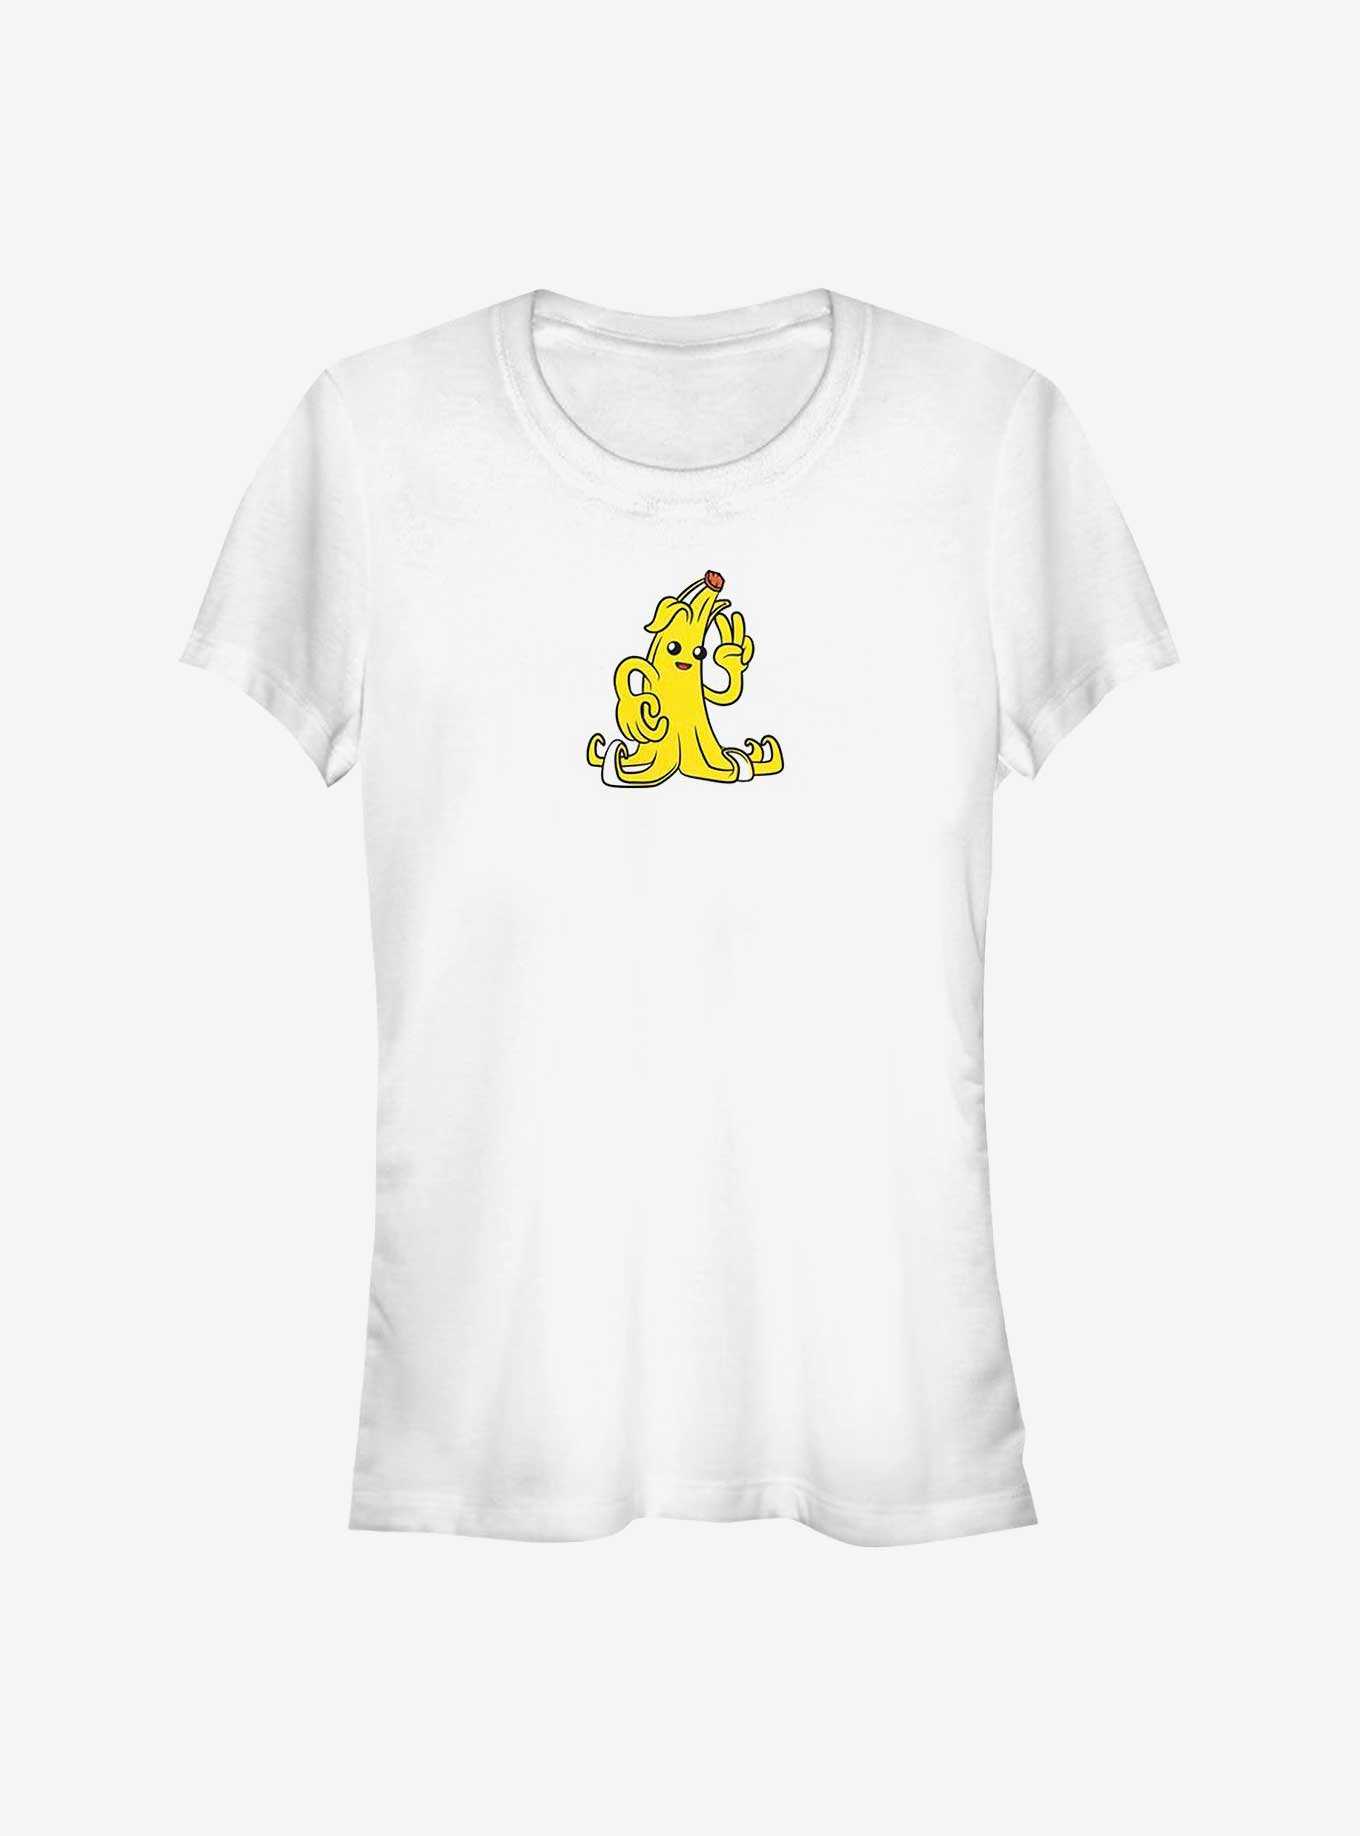 Fortnite Banana Peely Peace Girls T-Shirt, , hi-res